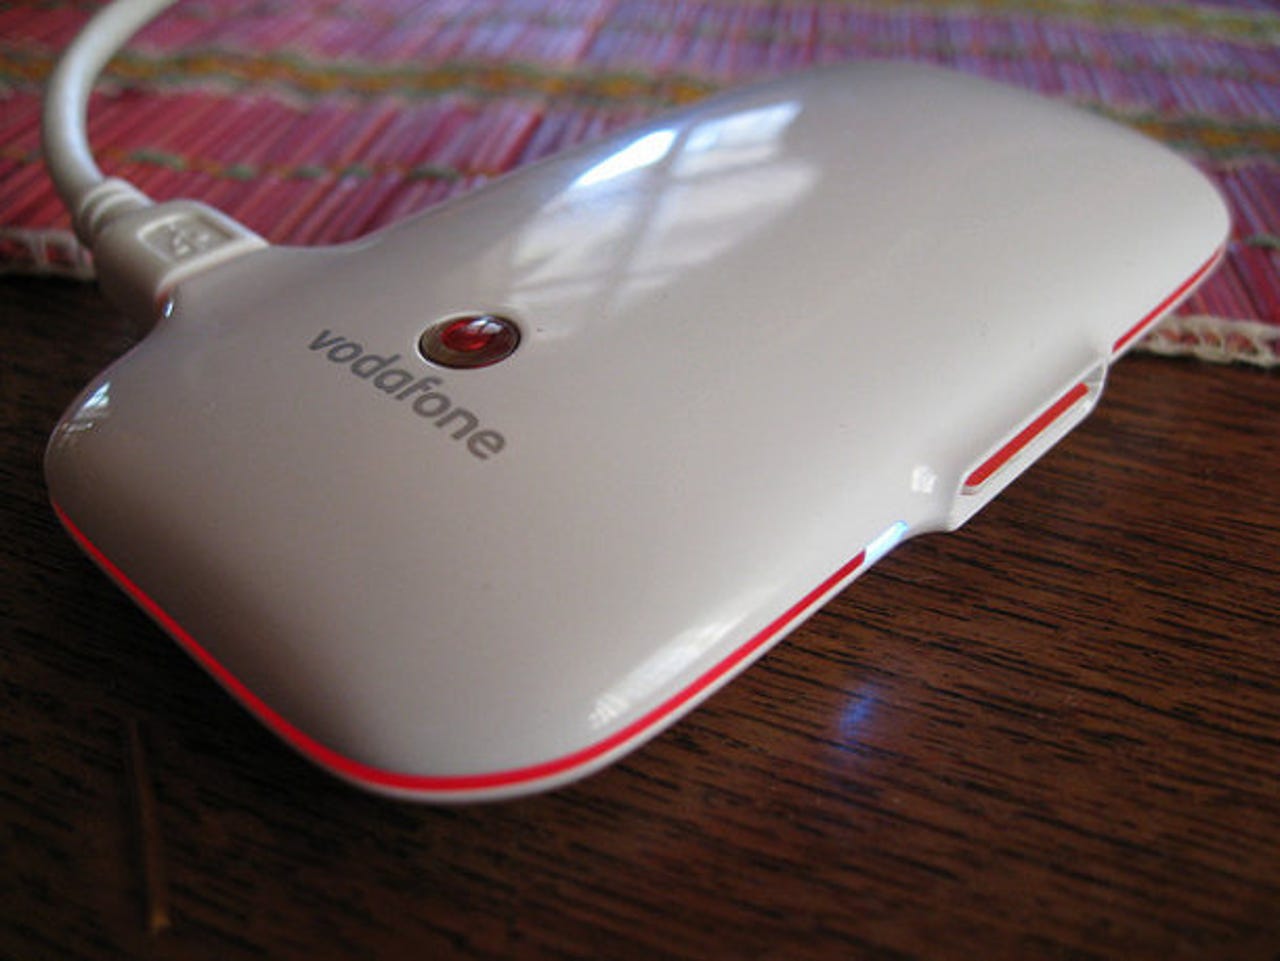 Vodafone 3G dongle: Ofcom surveys mobile broadband performance